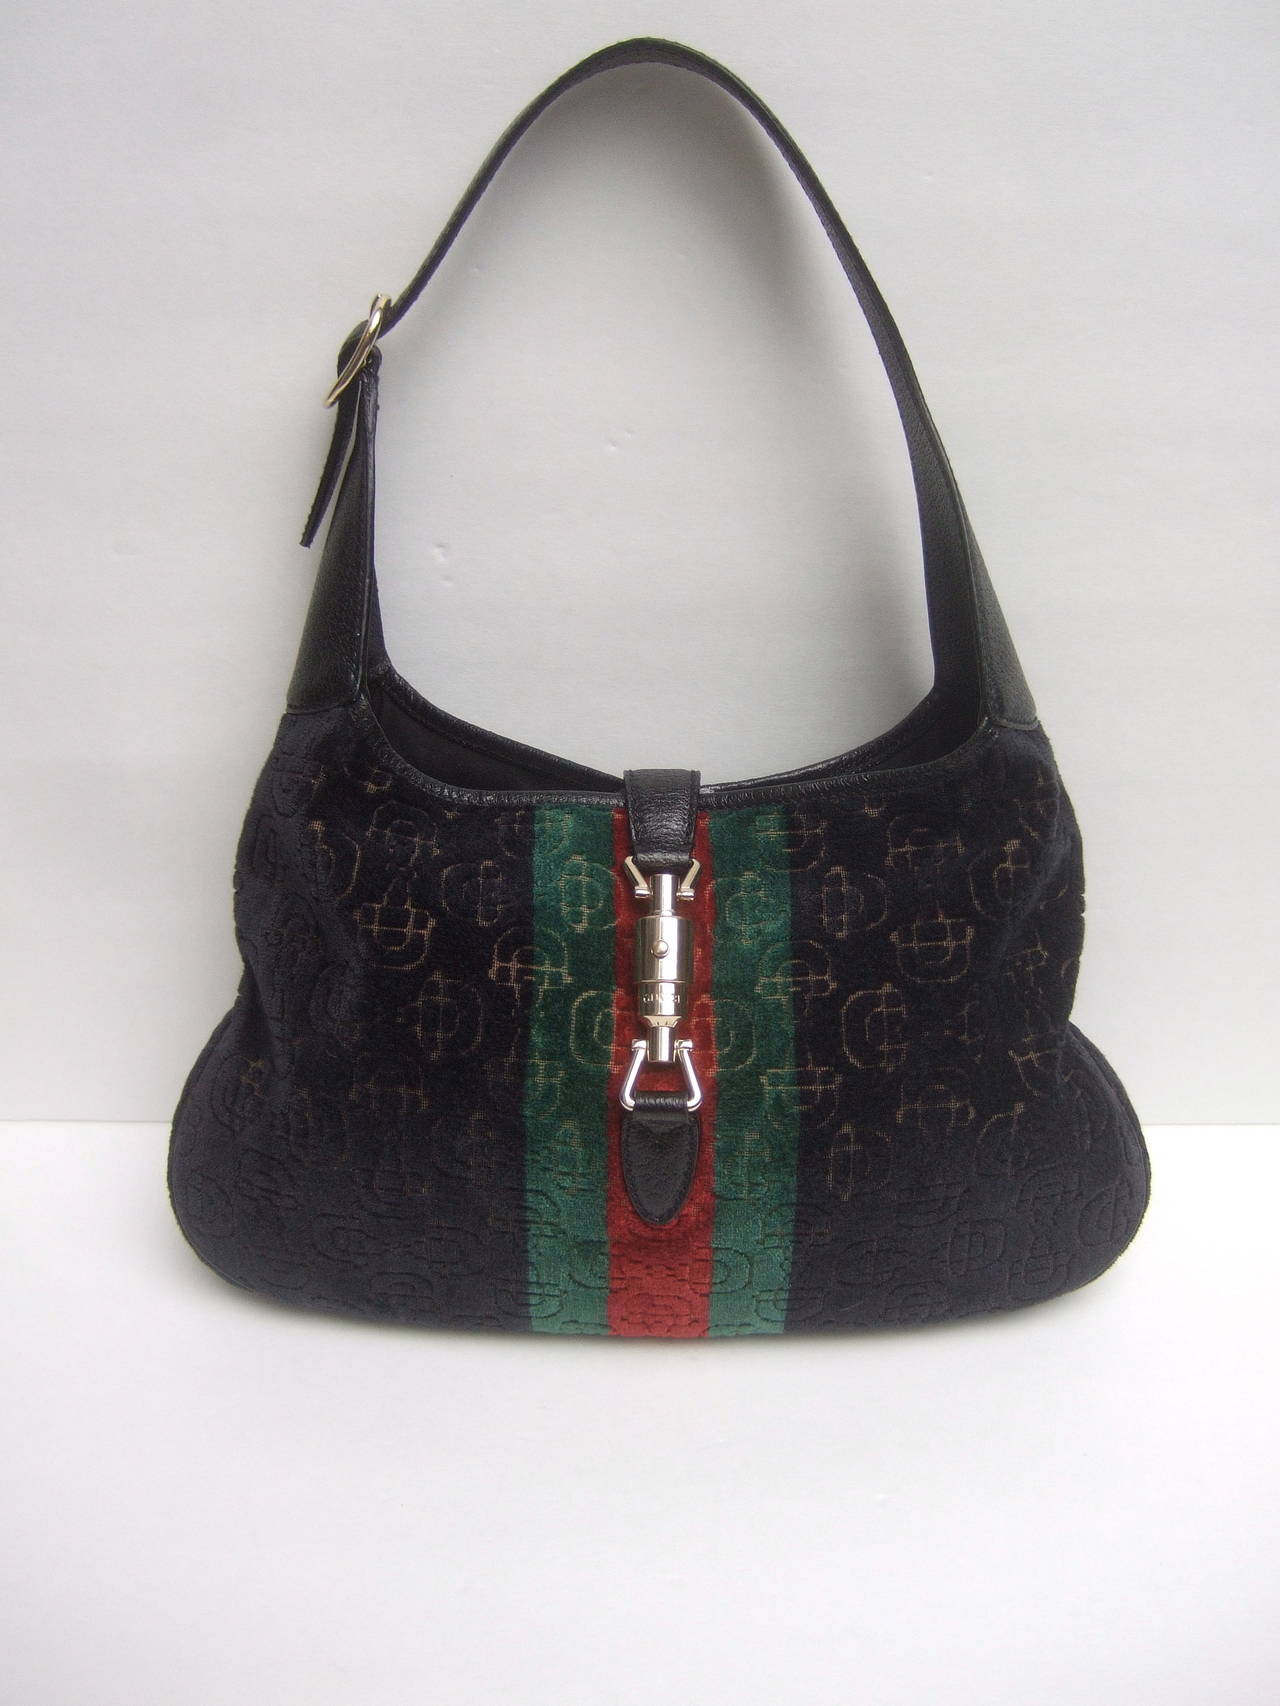 Women's Gucci Italy Iconic Devore Jackie O Piston Handbag